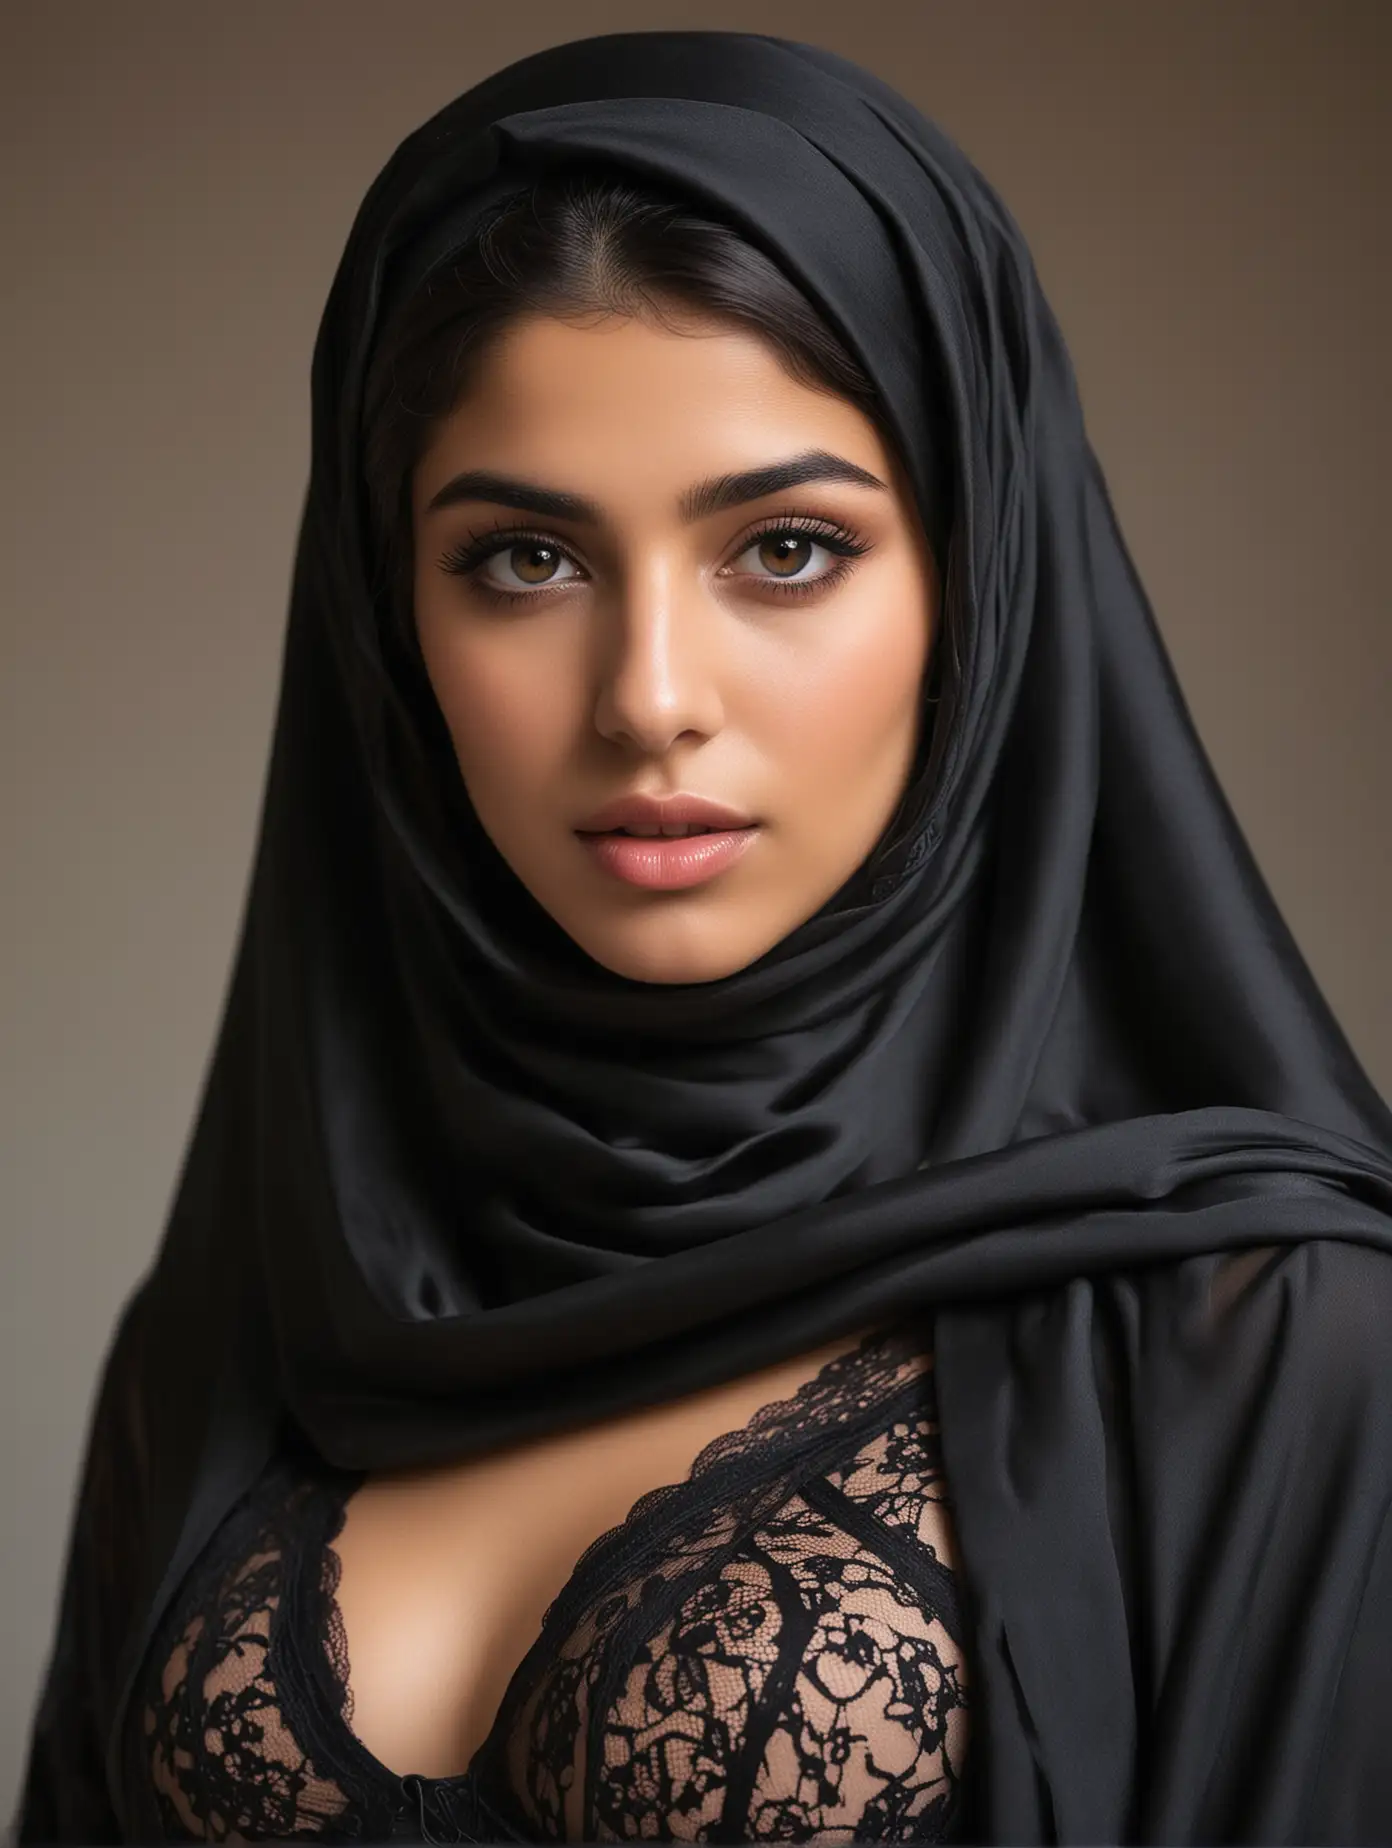 Elegant IranianAmerican Model in Silk Niqab and Lingerie